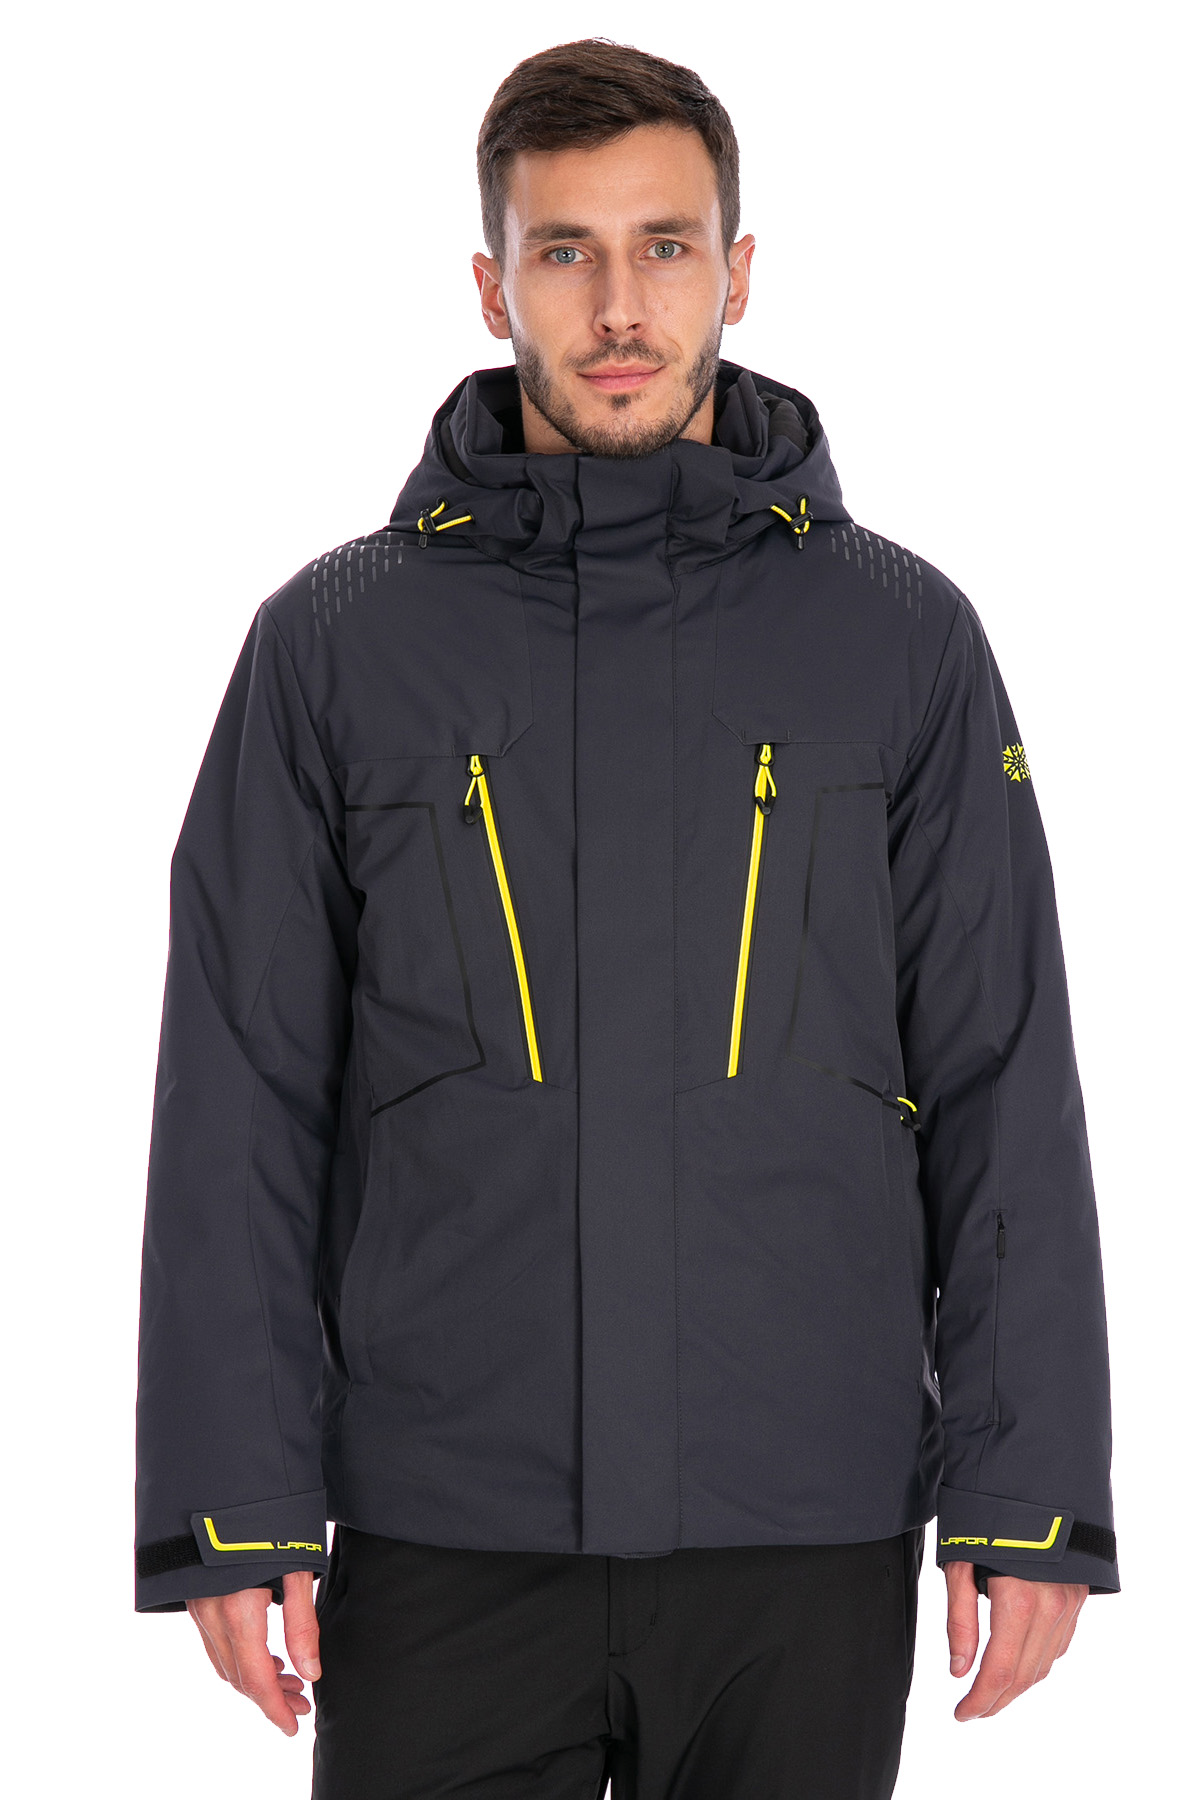 Мужская горнолыжная Куртка Lafor Темно-серый, 767013 (54, xxl)